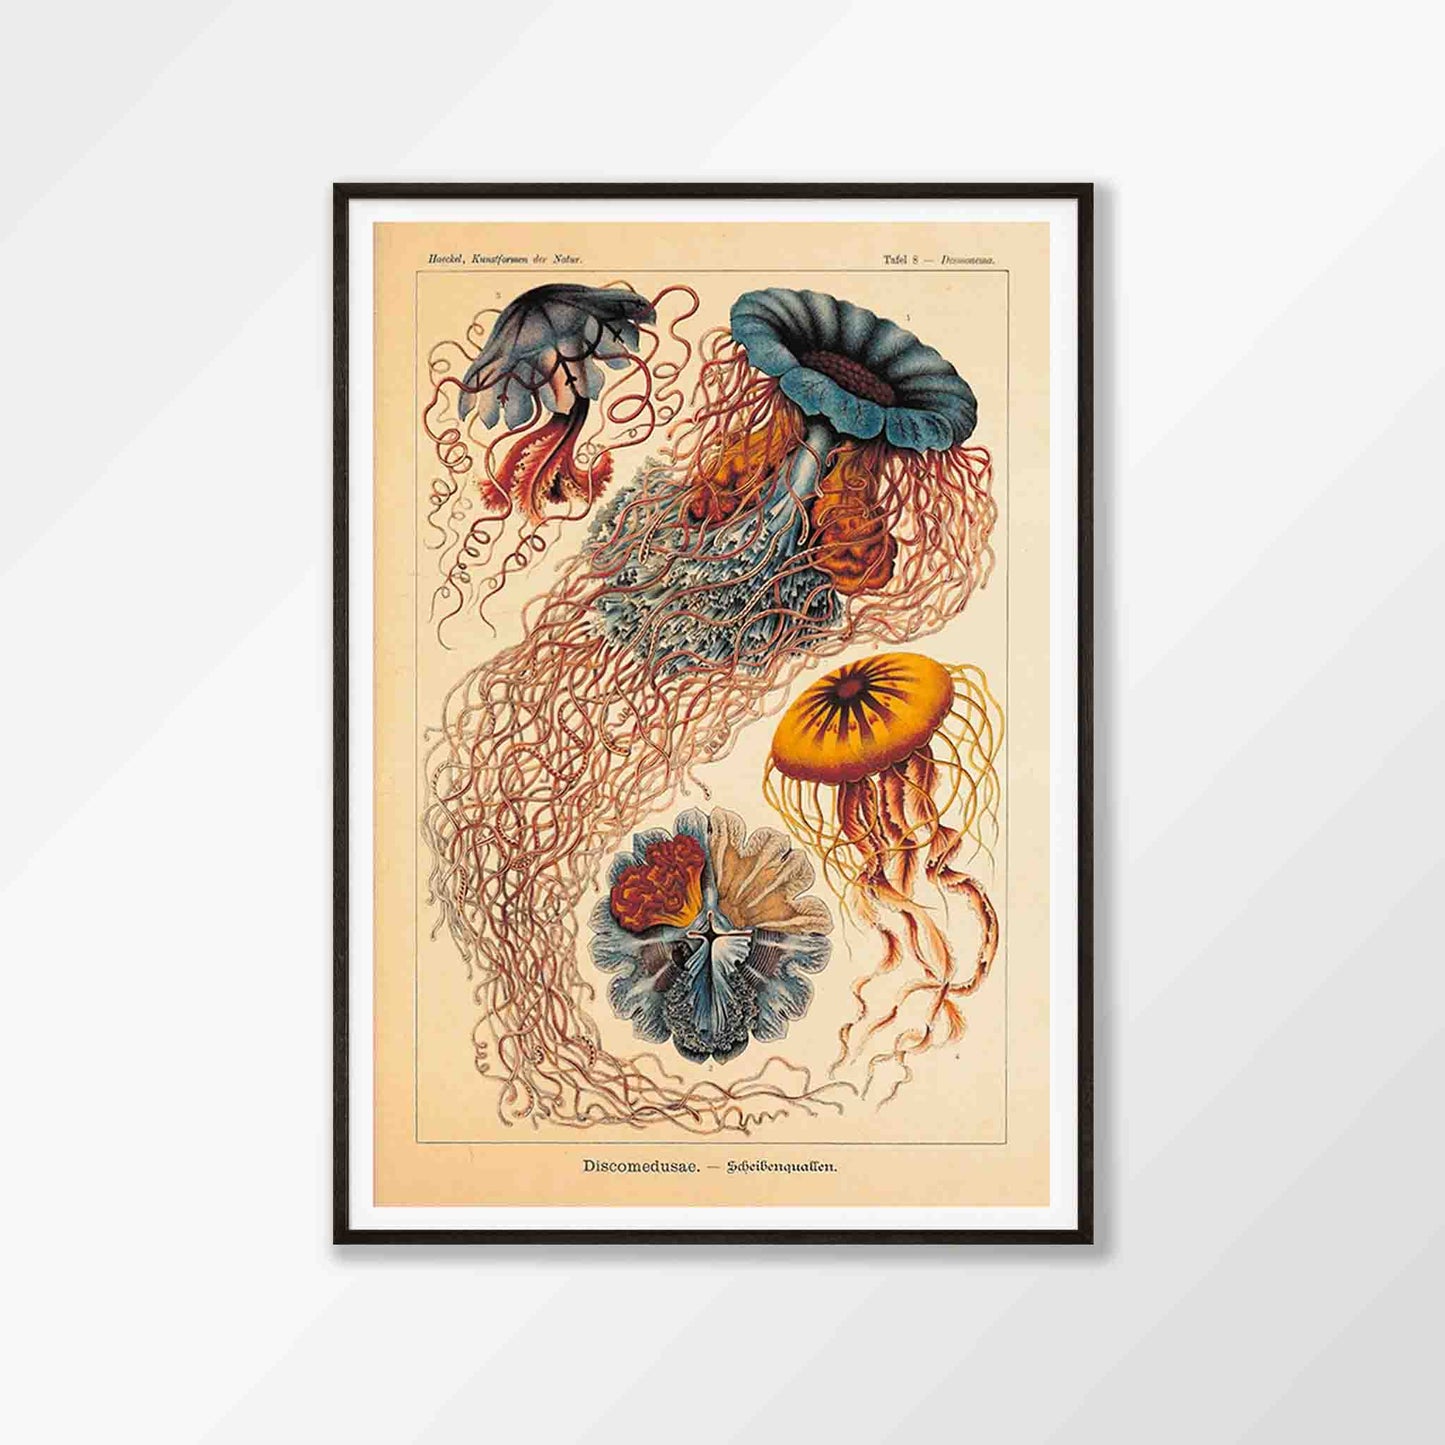 Discomedusae Jellyfish by Ernst Haeckel